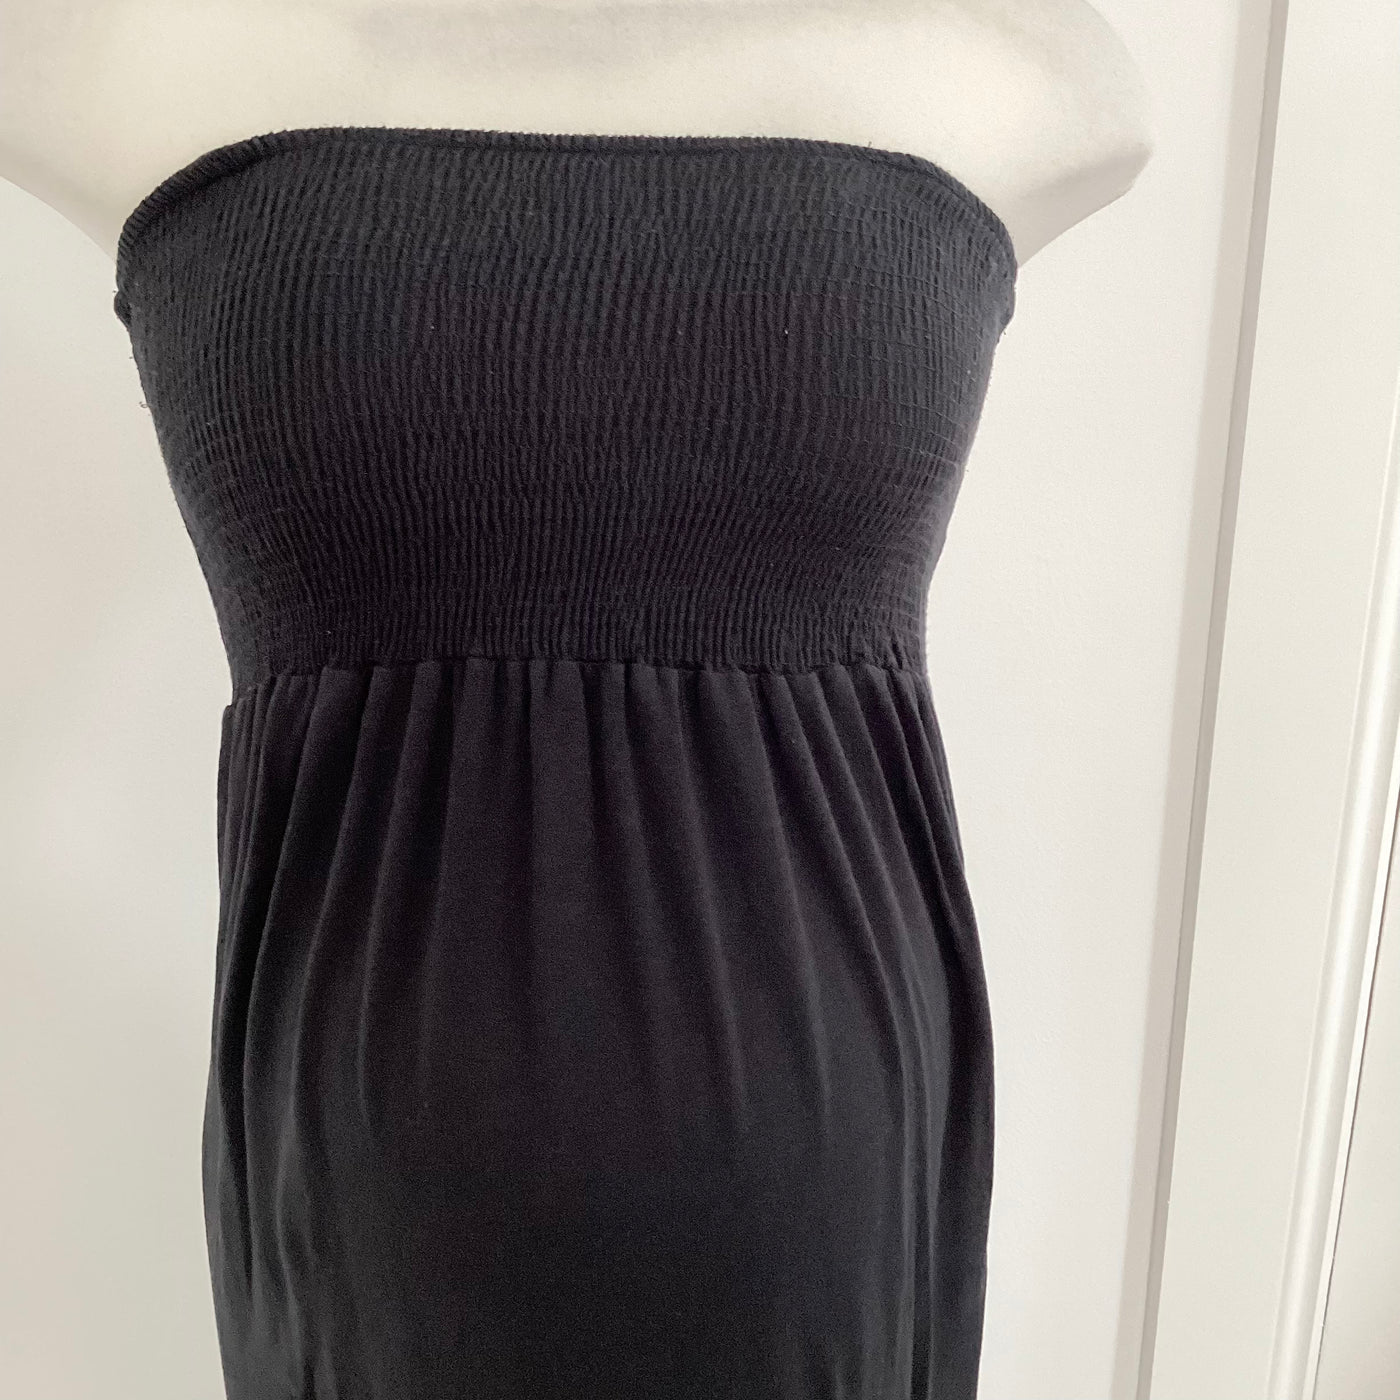 Next Maternity Black Sleeveless Maxi Dress - Size 8